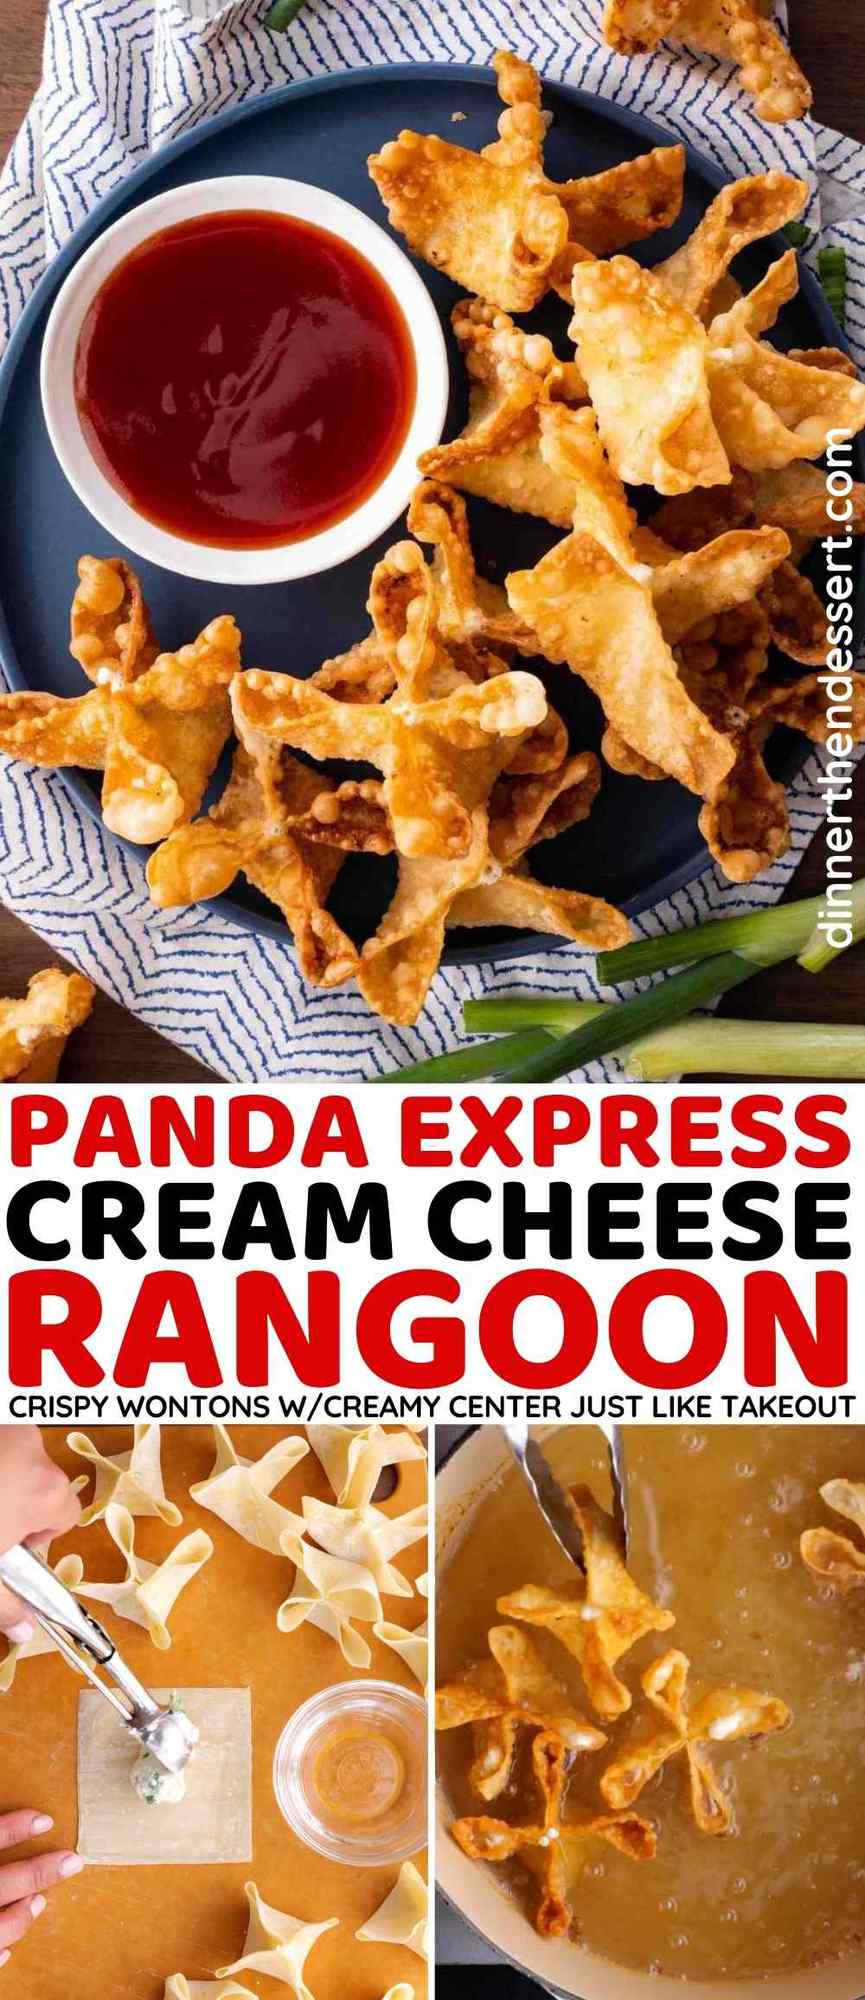 Panda Express Cream Cheese Rangoon Collage